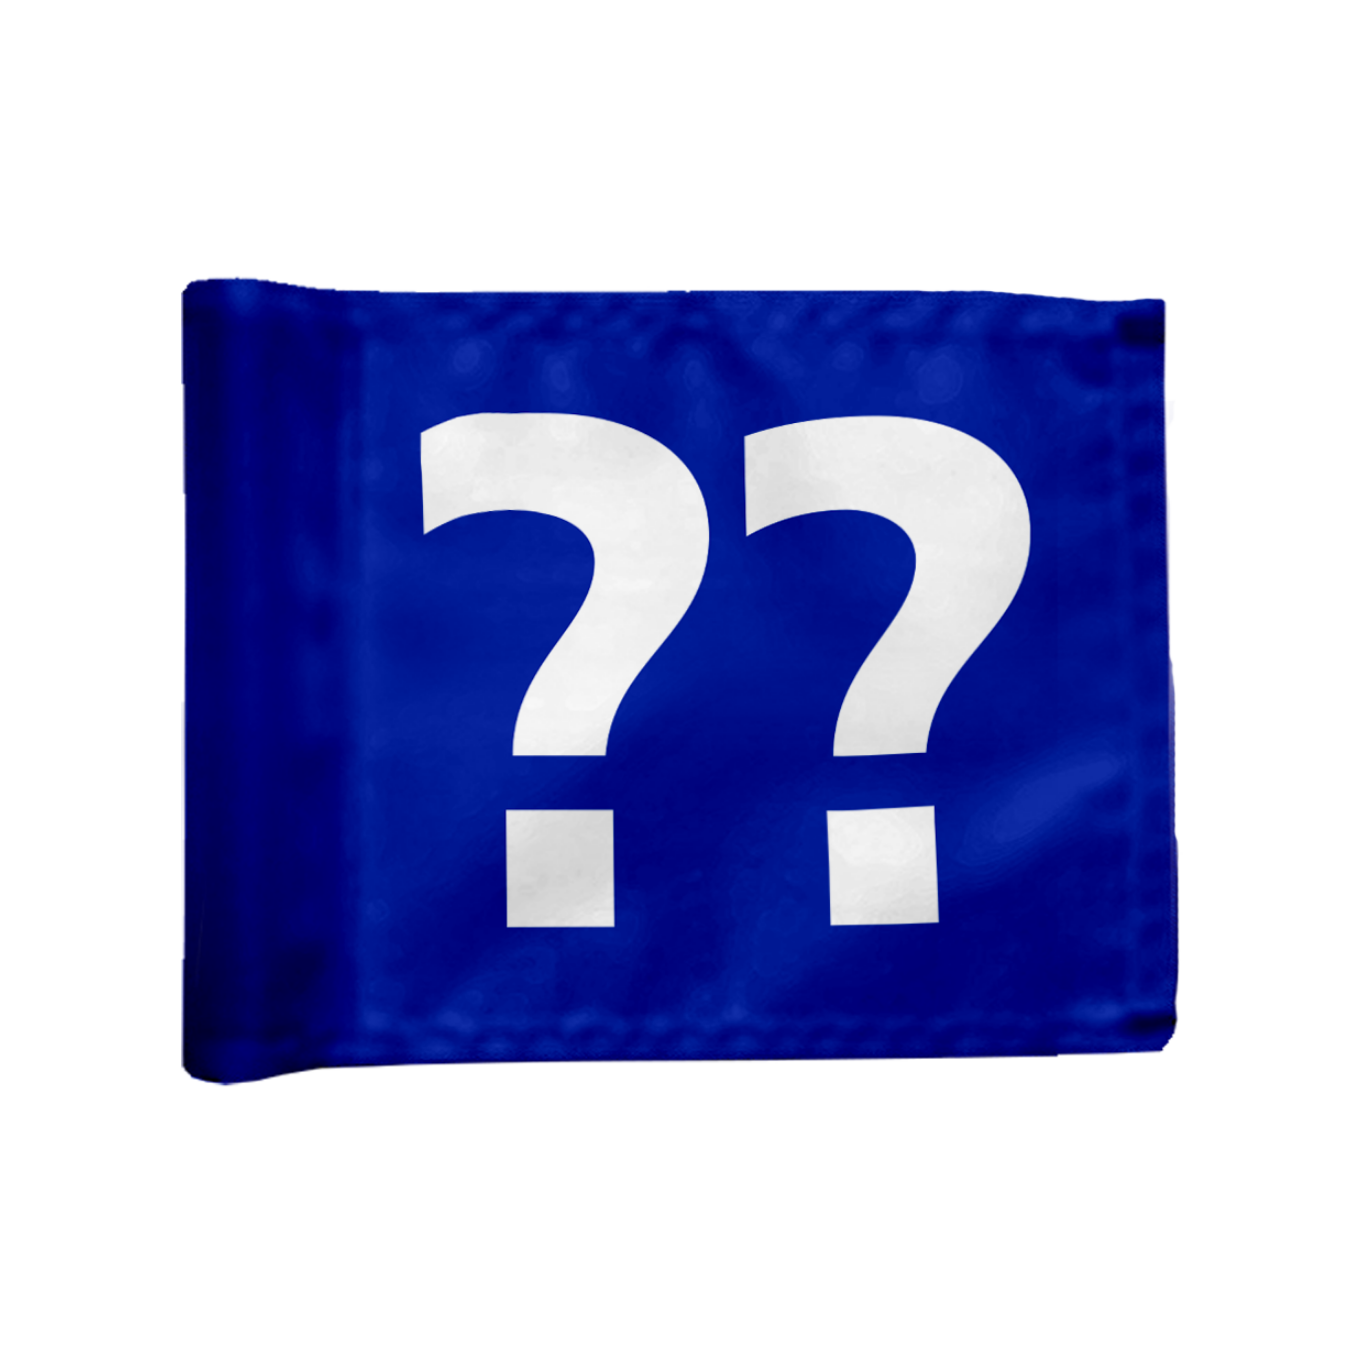 Styckvis Adventure Golf flagga i blå med valfritt hålnummer, 115 gr flaggduk